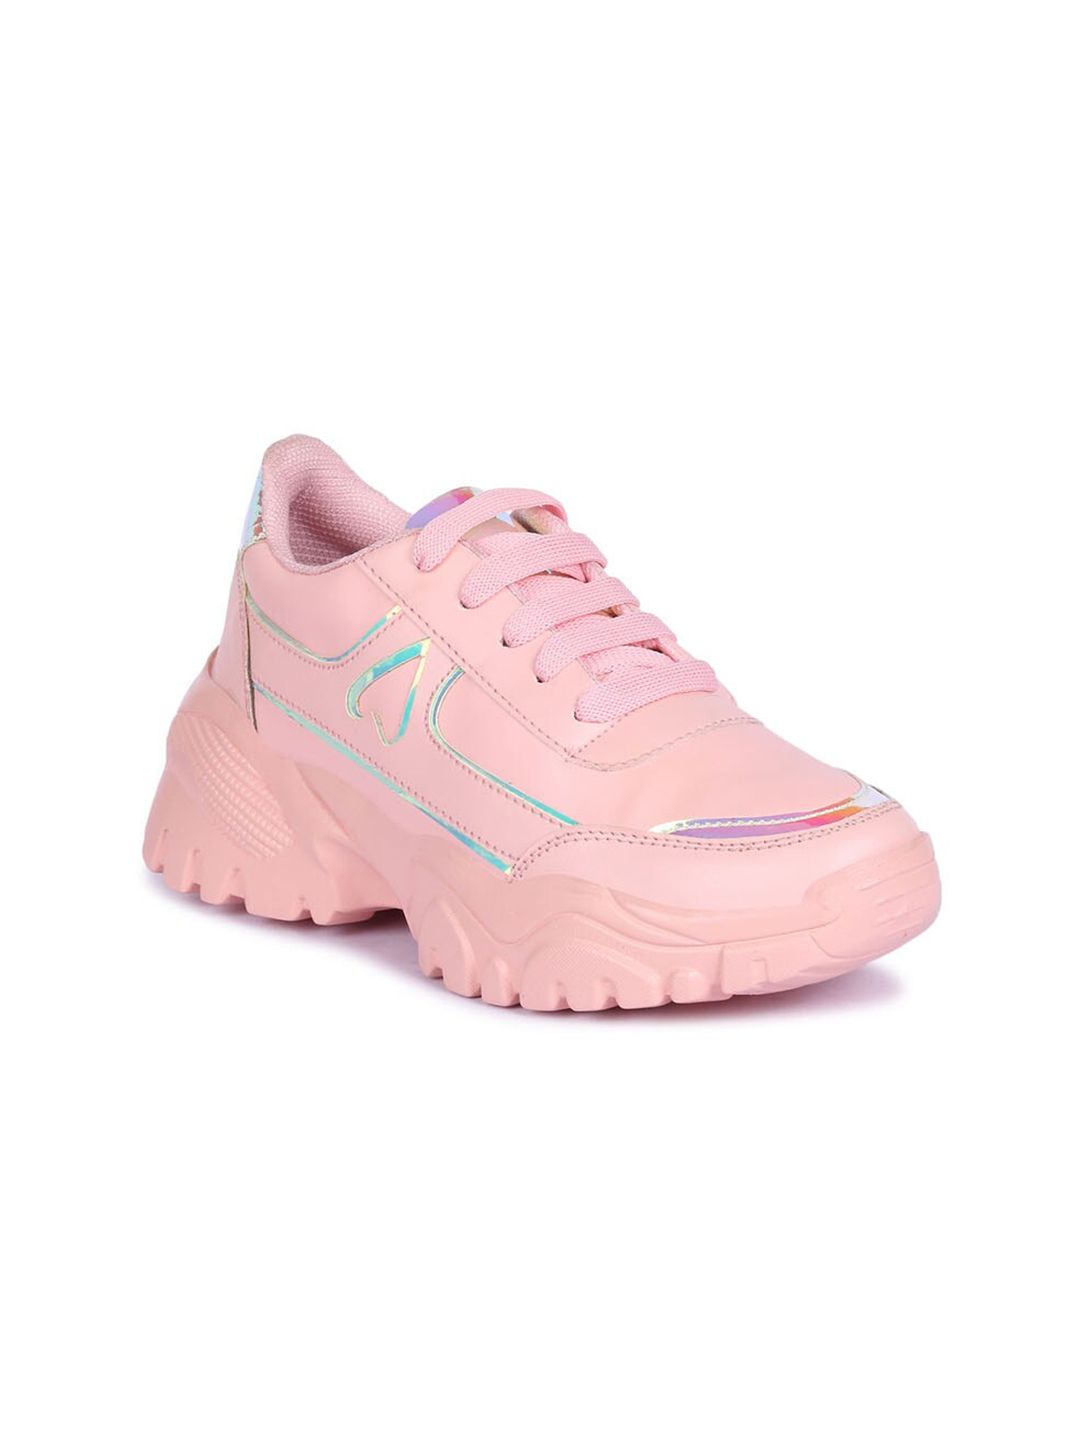 Alishtezia Women Pink Walking Non-Marking Shoes Price in India